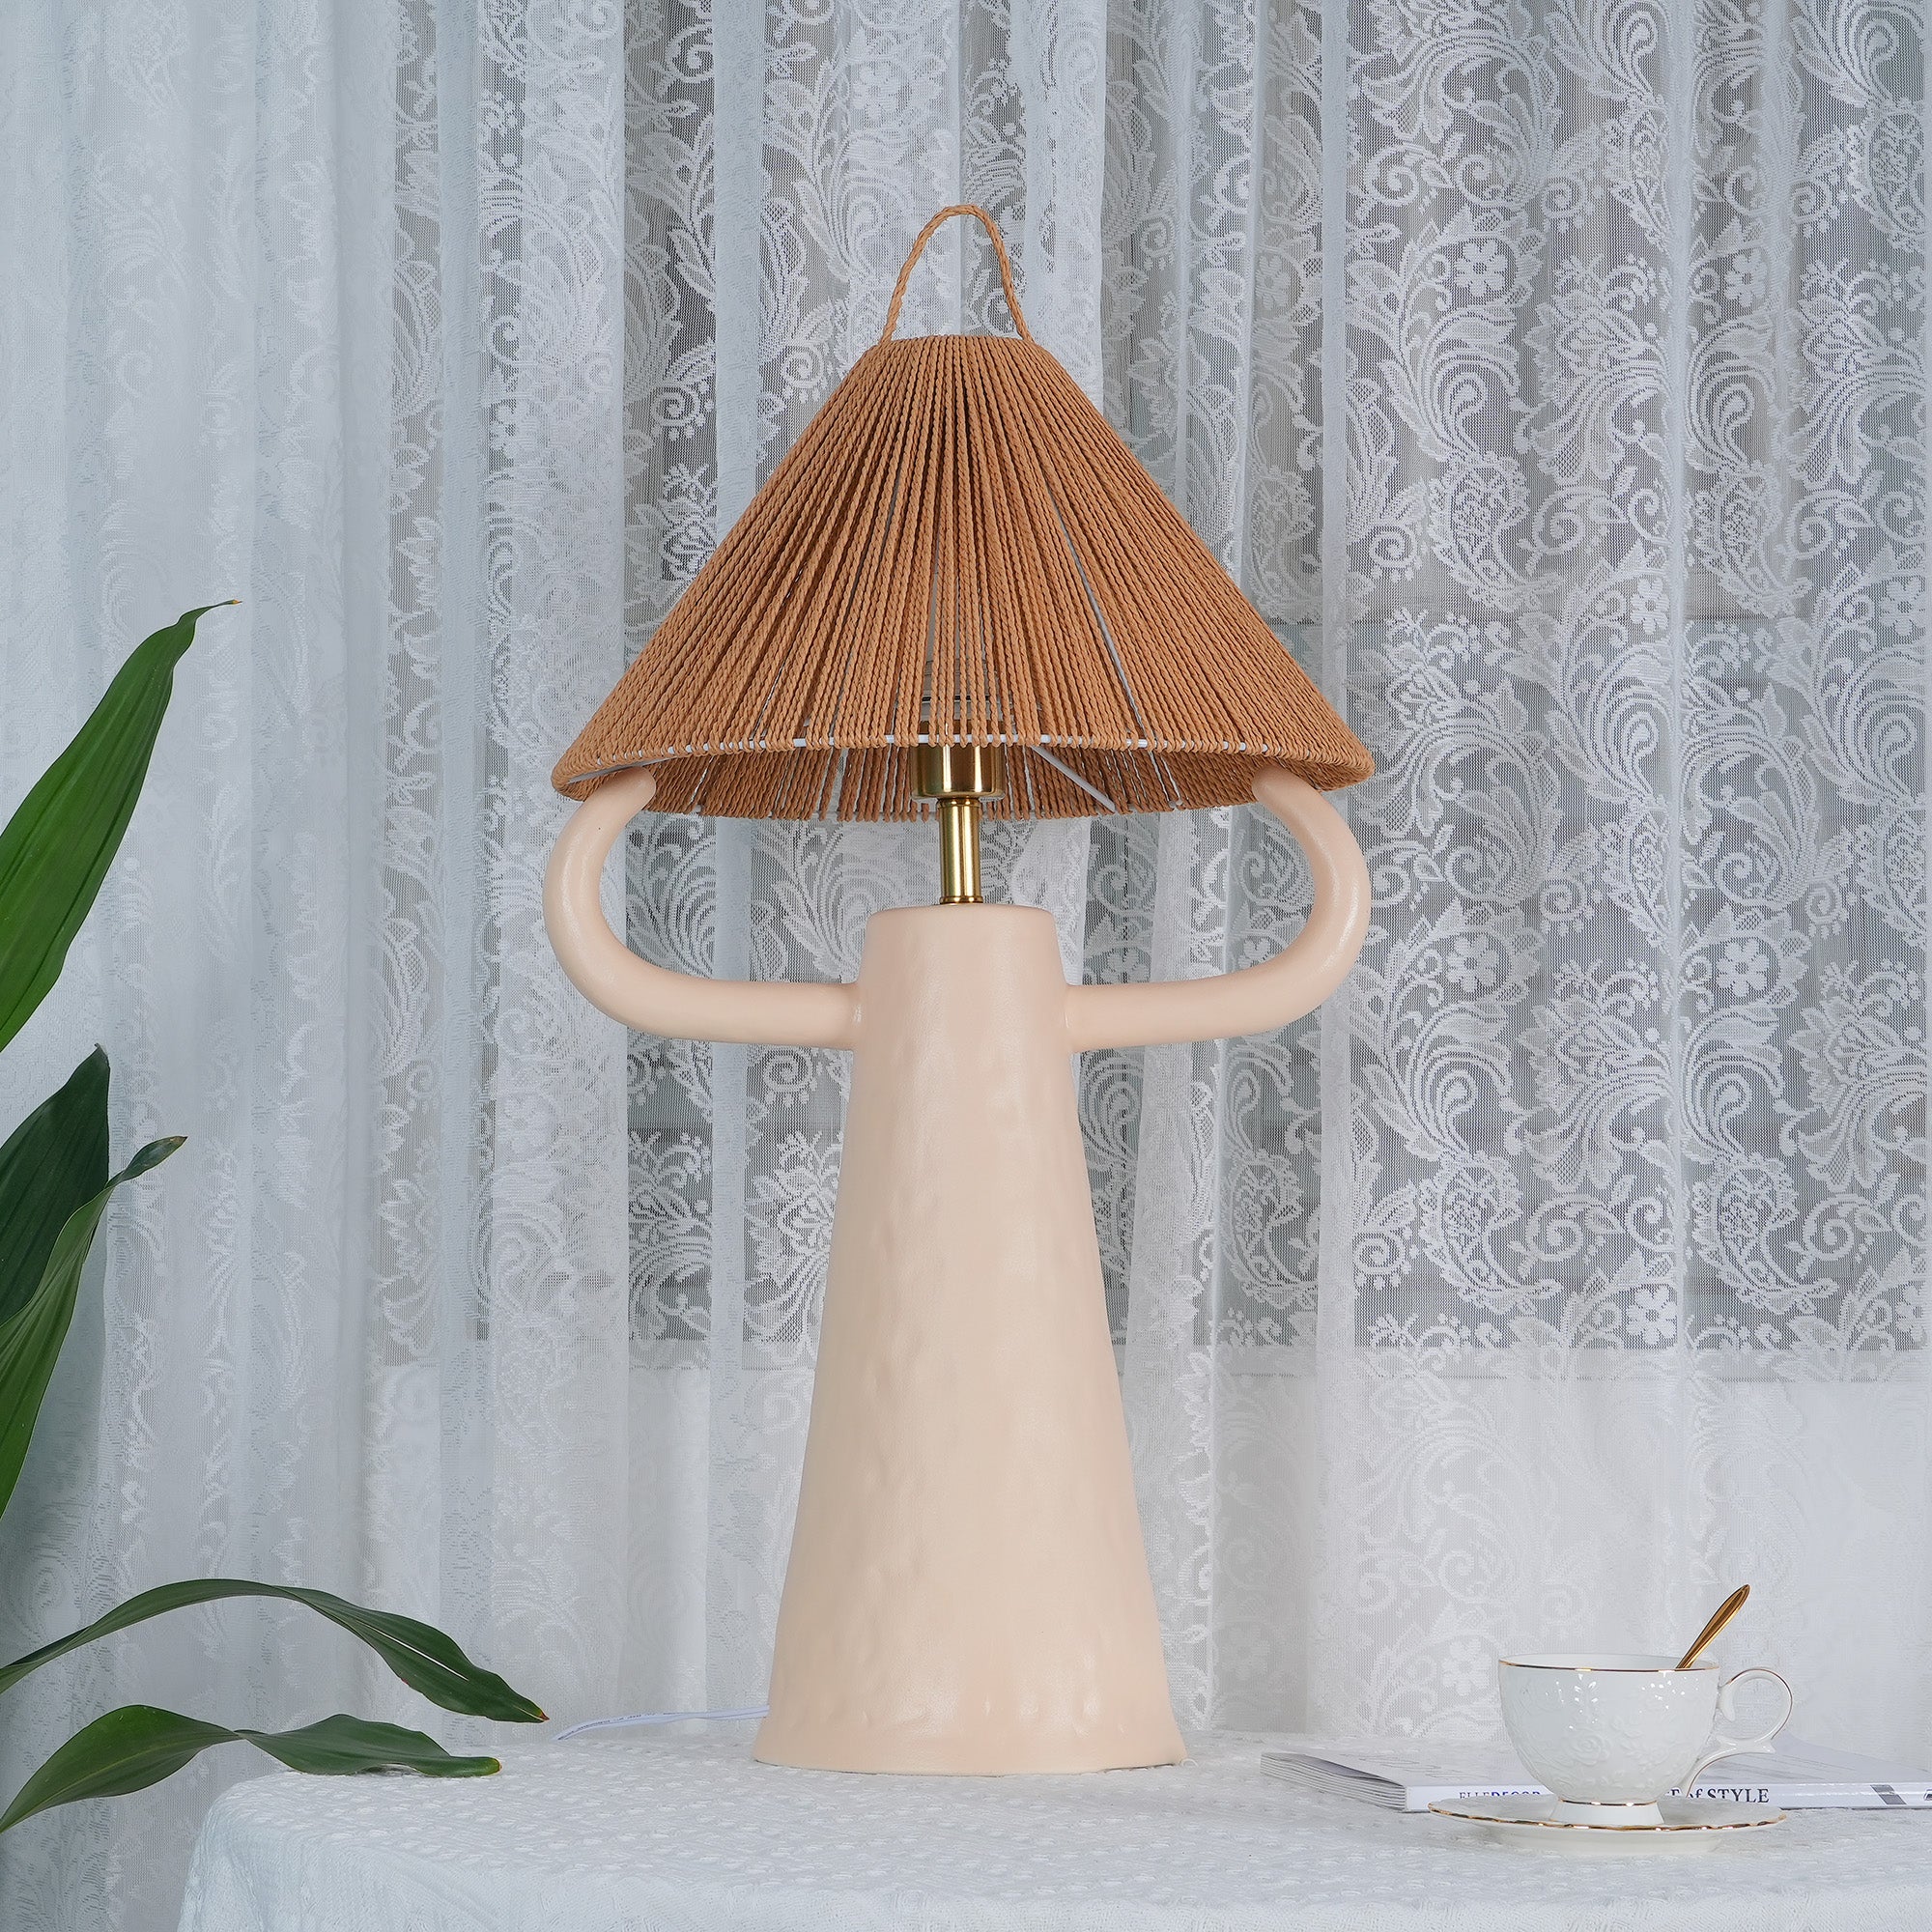 Ceramic Twine Bedroom Table Lamp